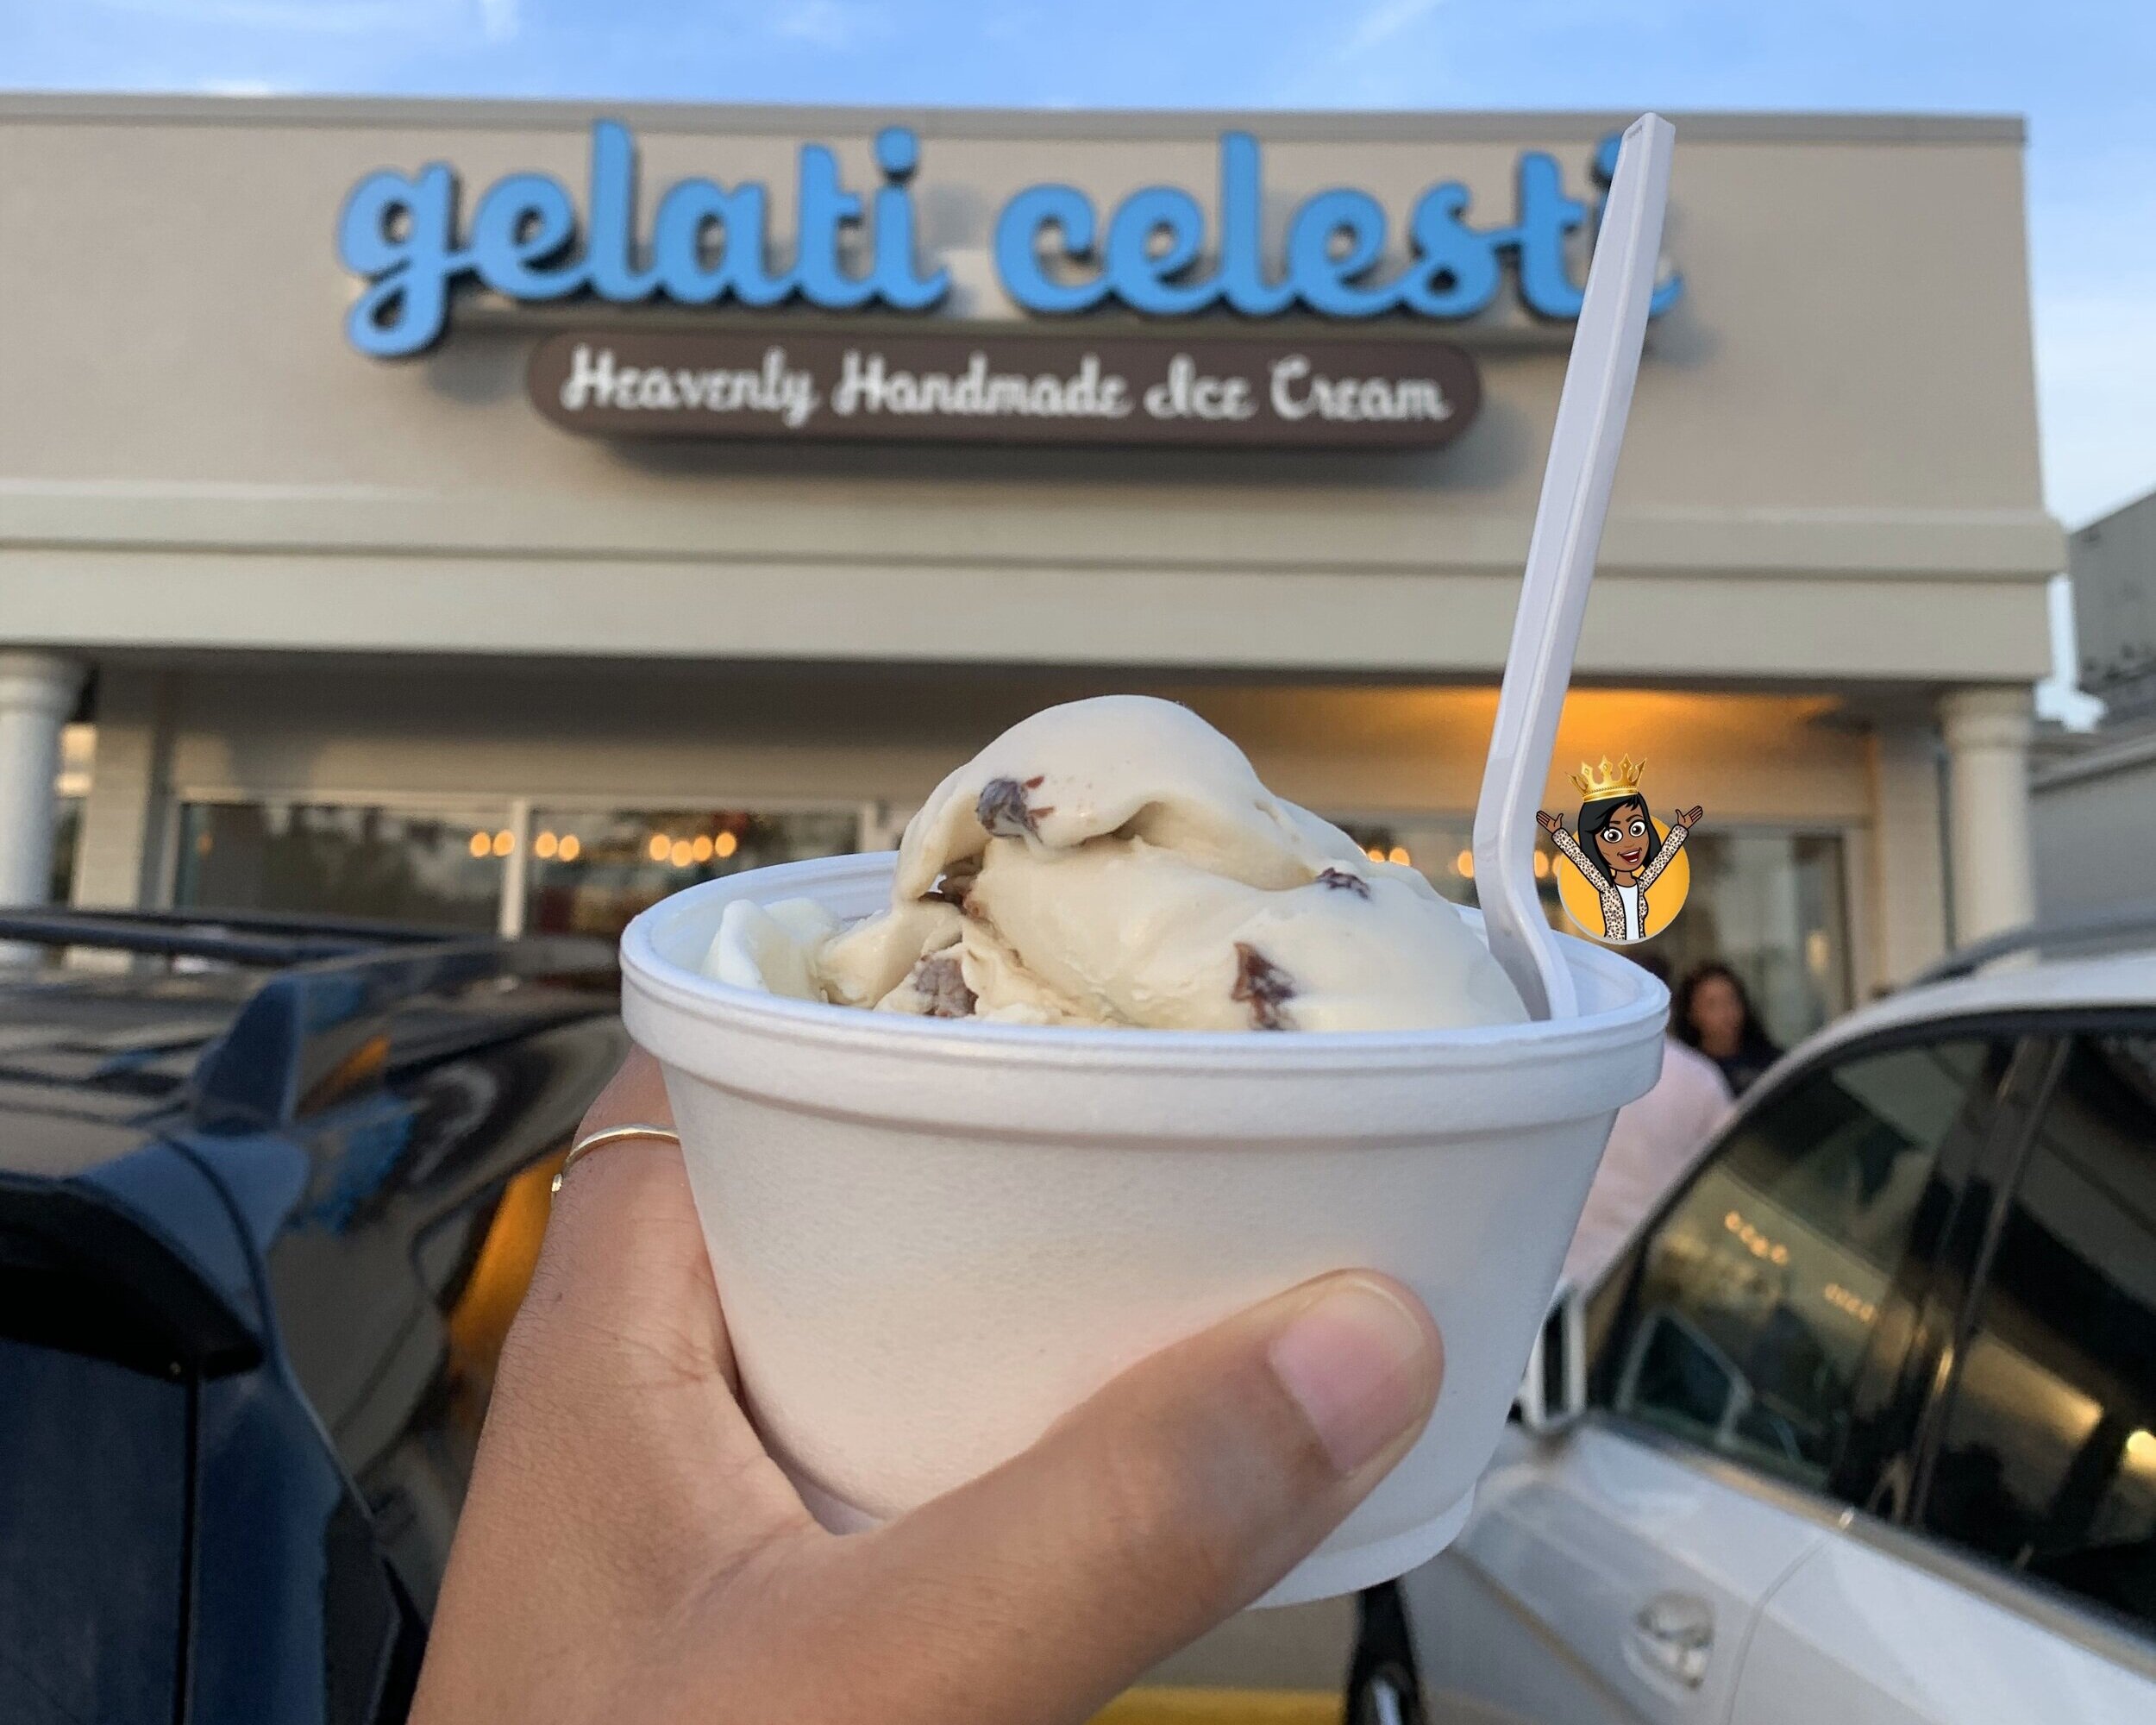 Gelati Celesti Ice Cream, Richmond, Ice Cream Near Me